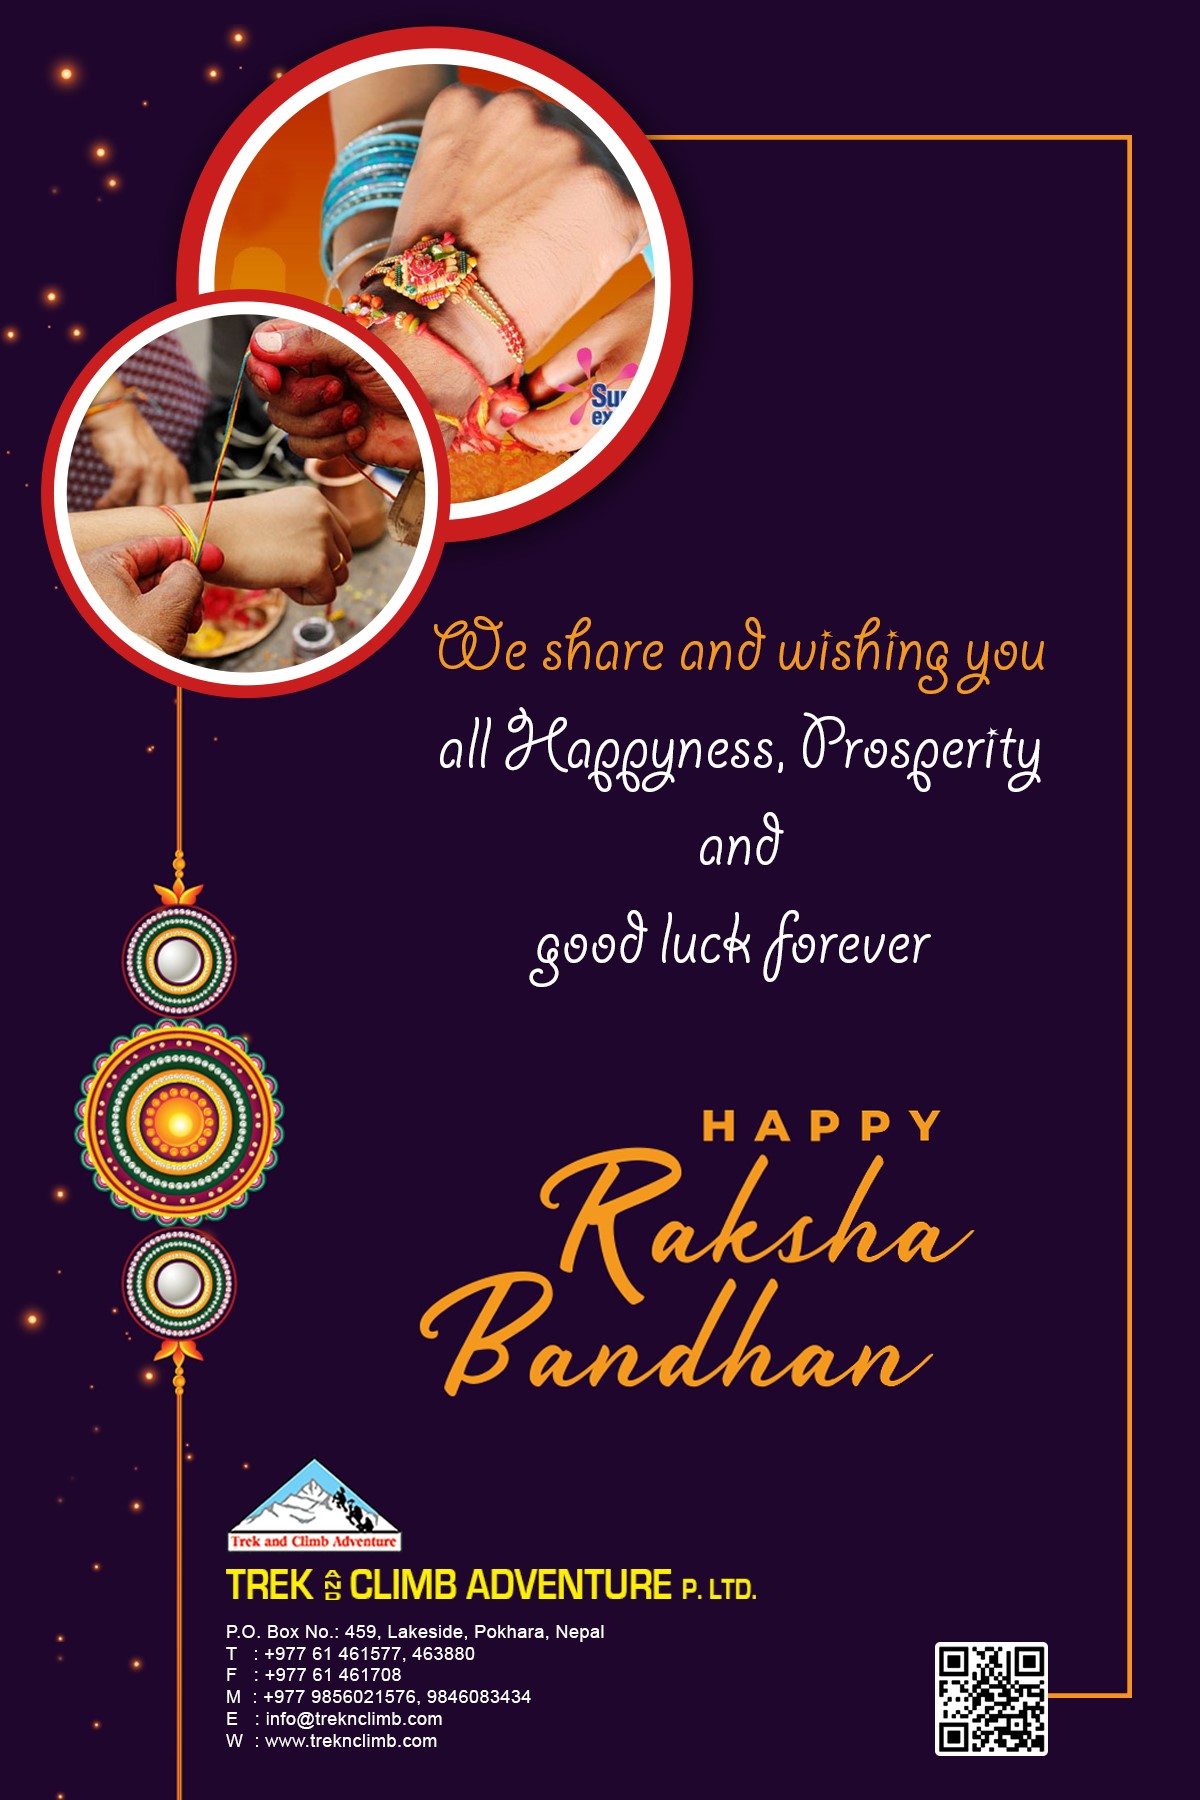 Raksha Bandhan is celebrate on the fullmoon day of the Nepali calendar